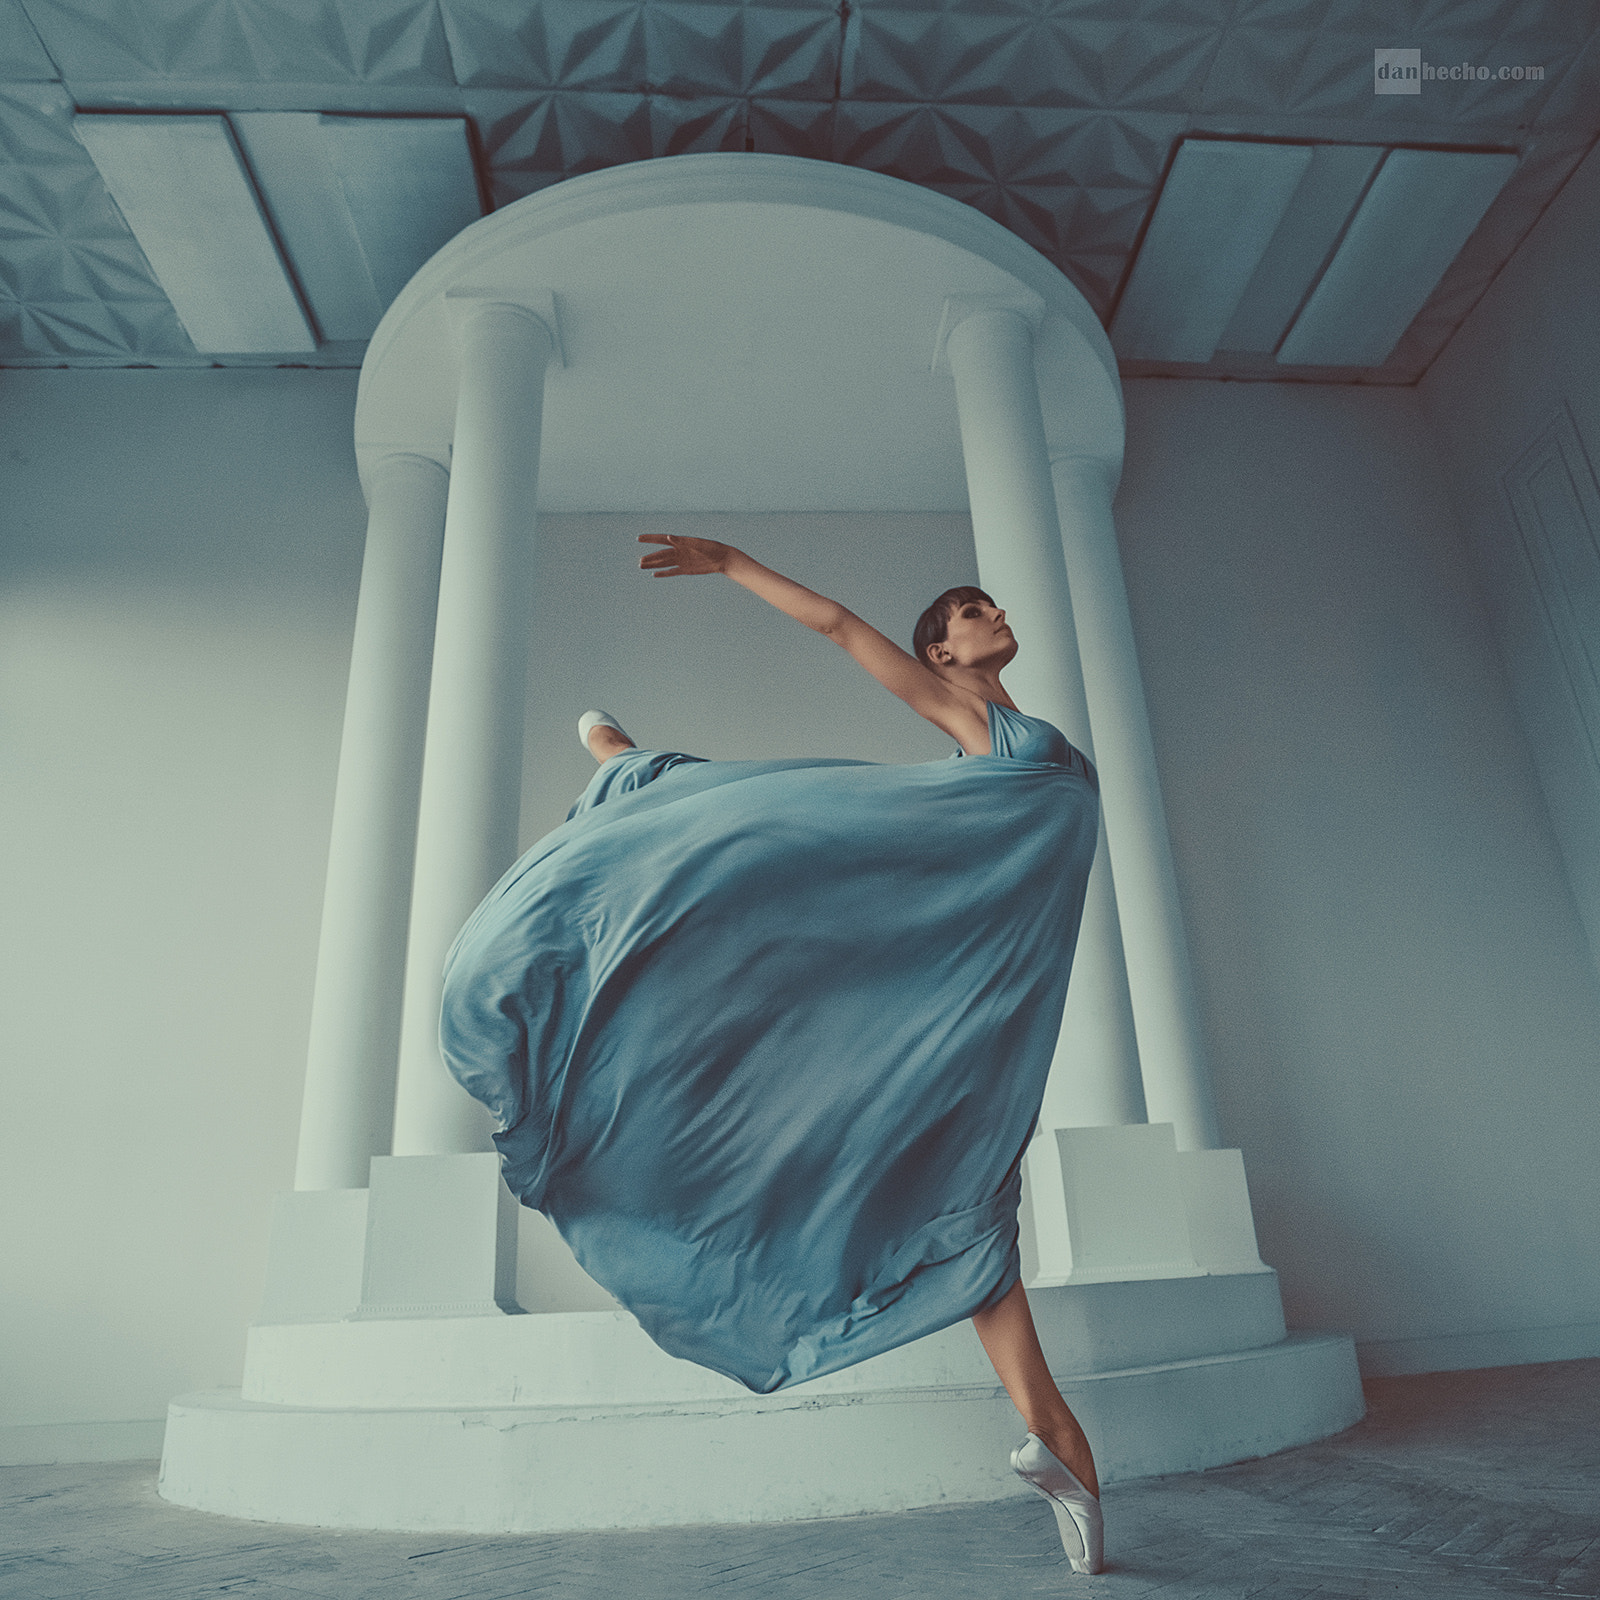 Dan Hecho Photography 500px Model Women Ballerina Ballet Slippers